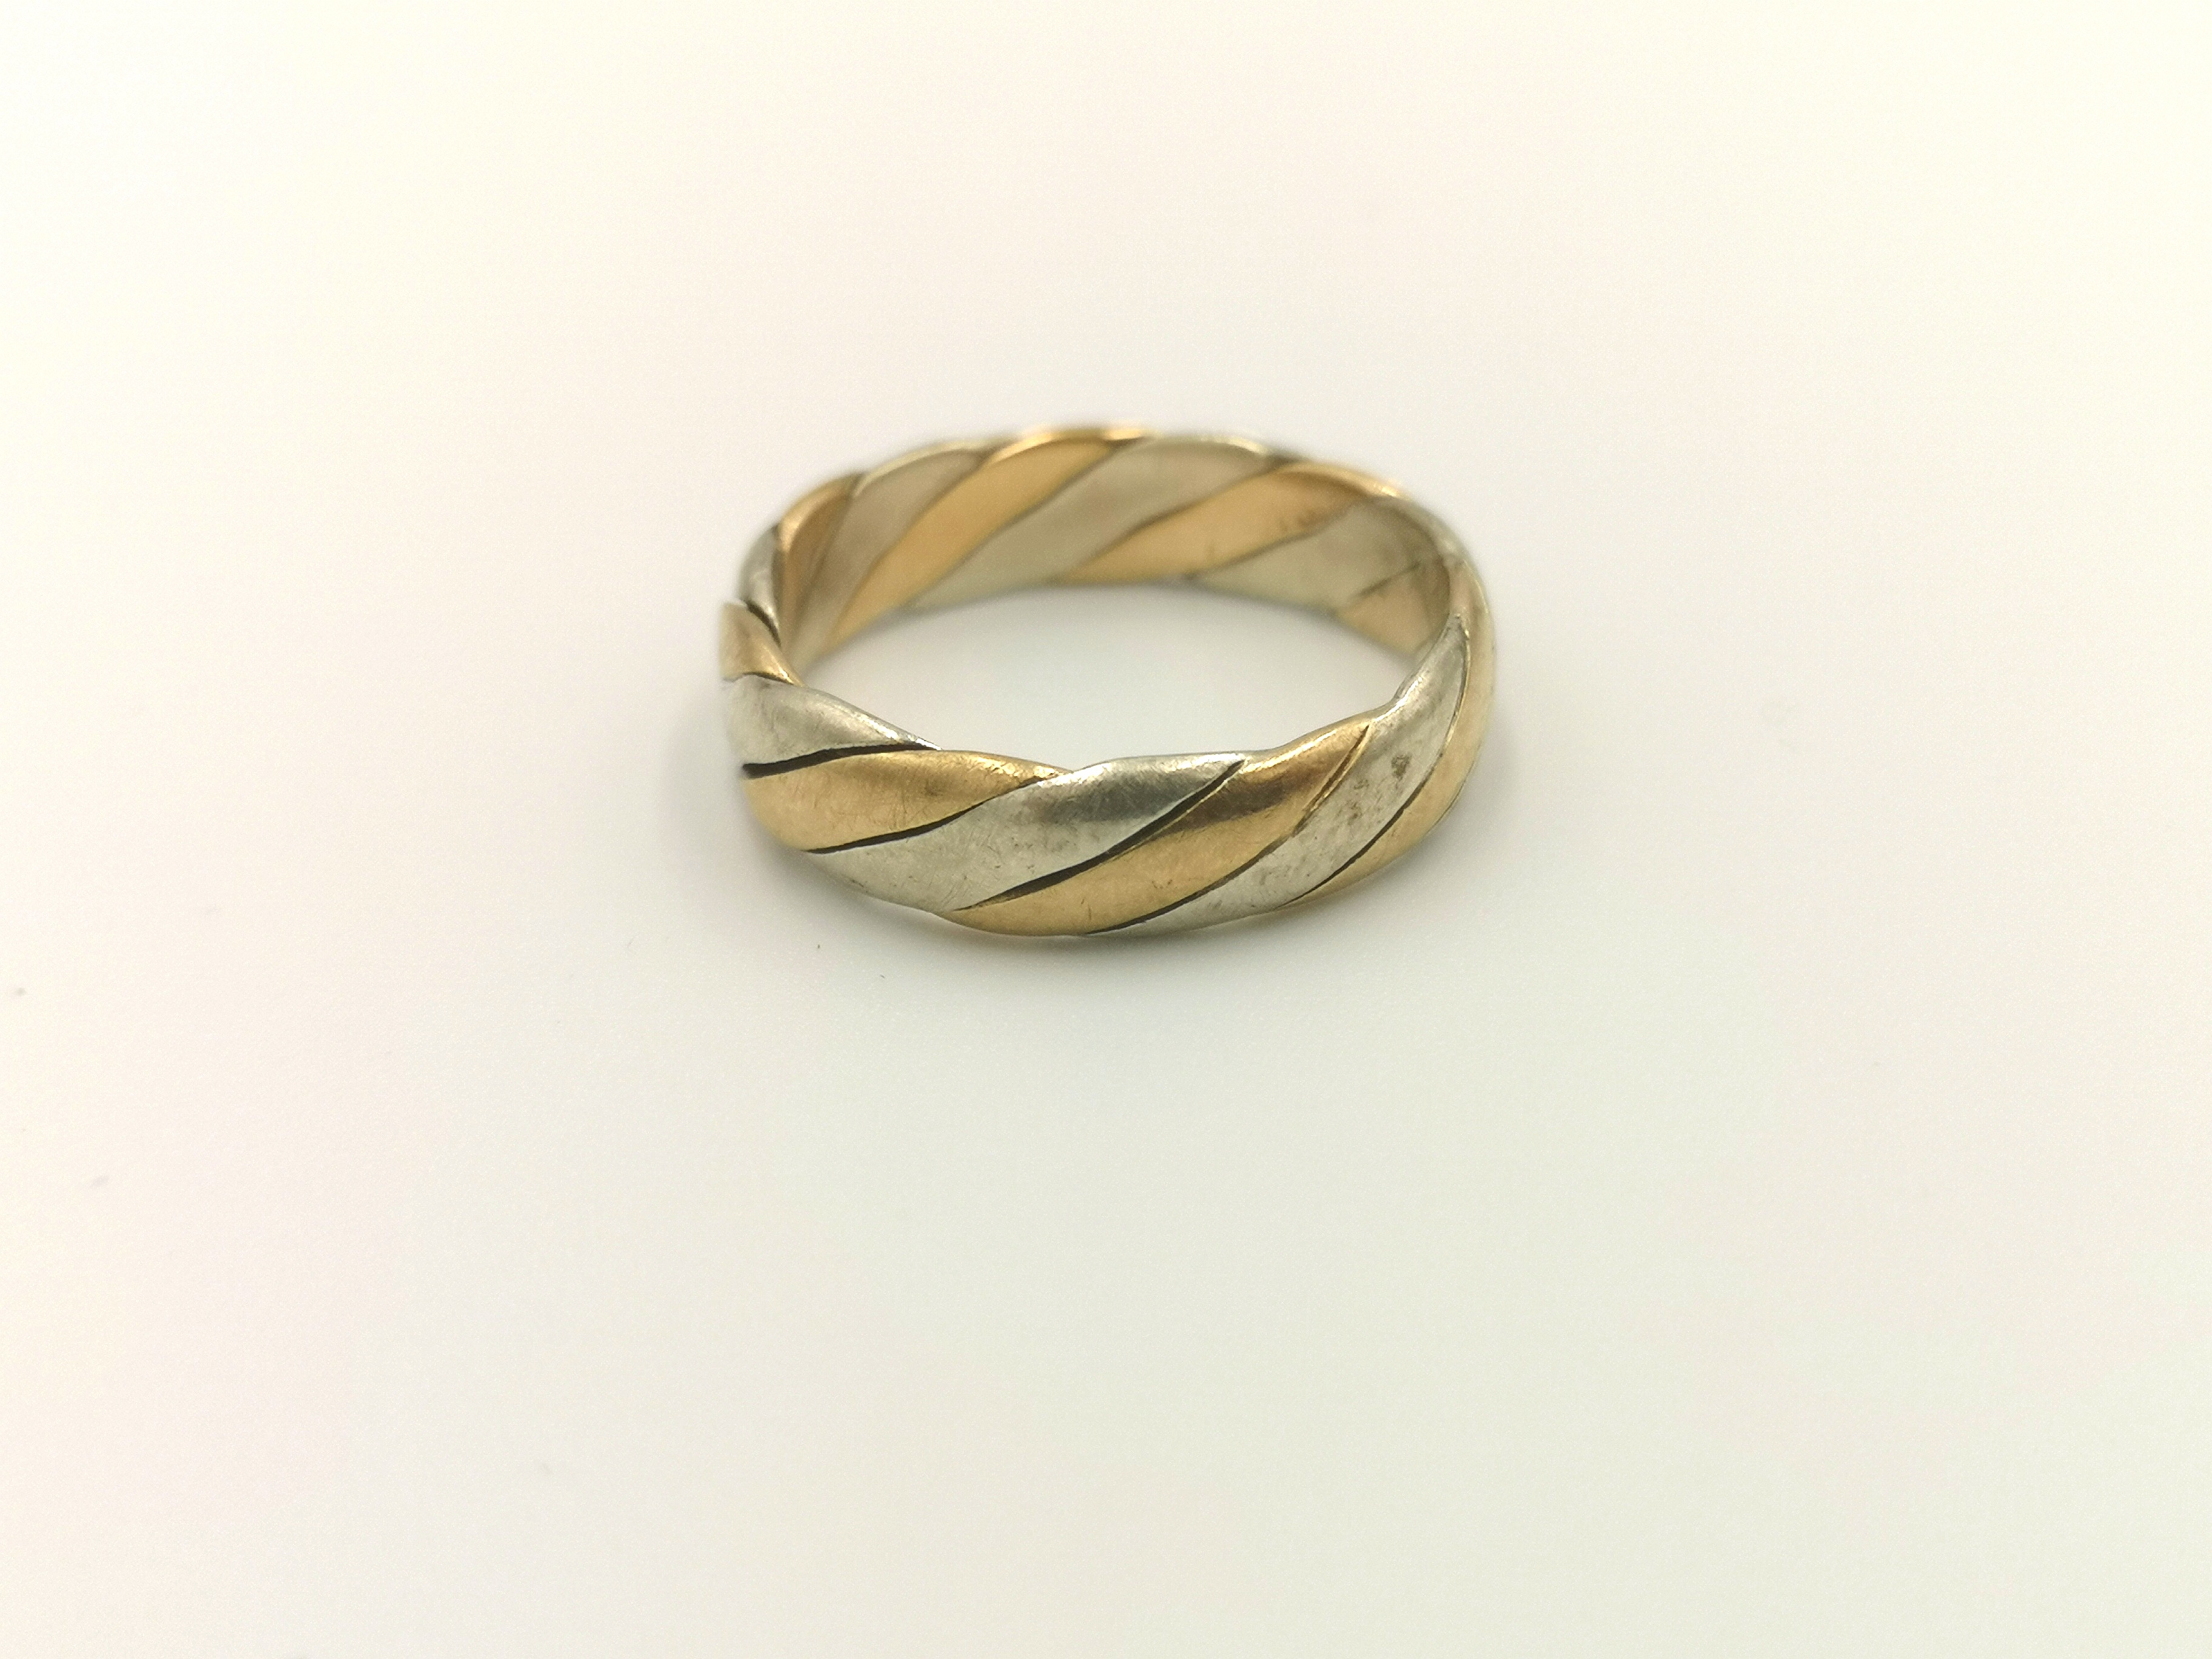 9ct gold ring